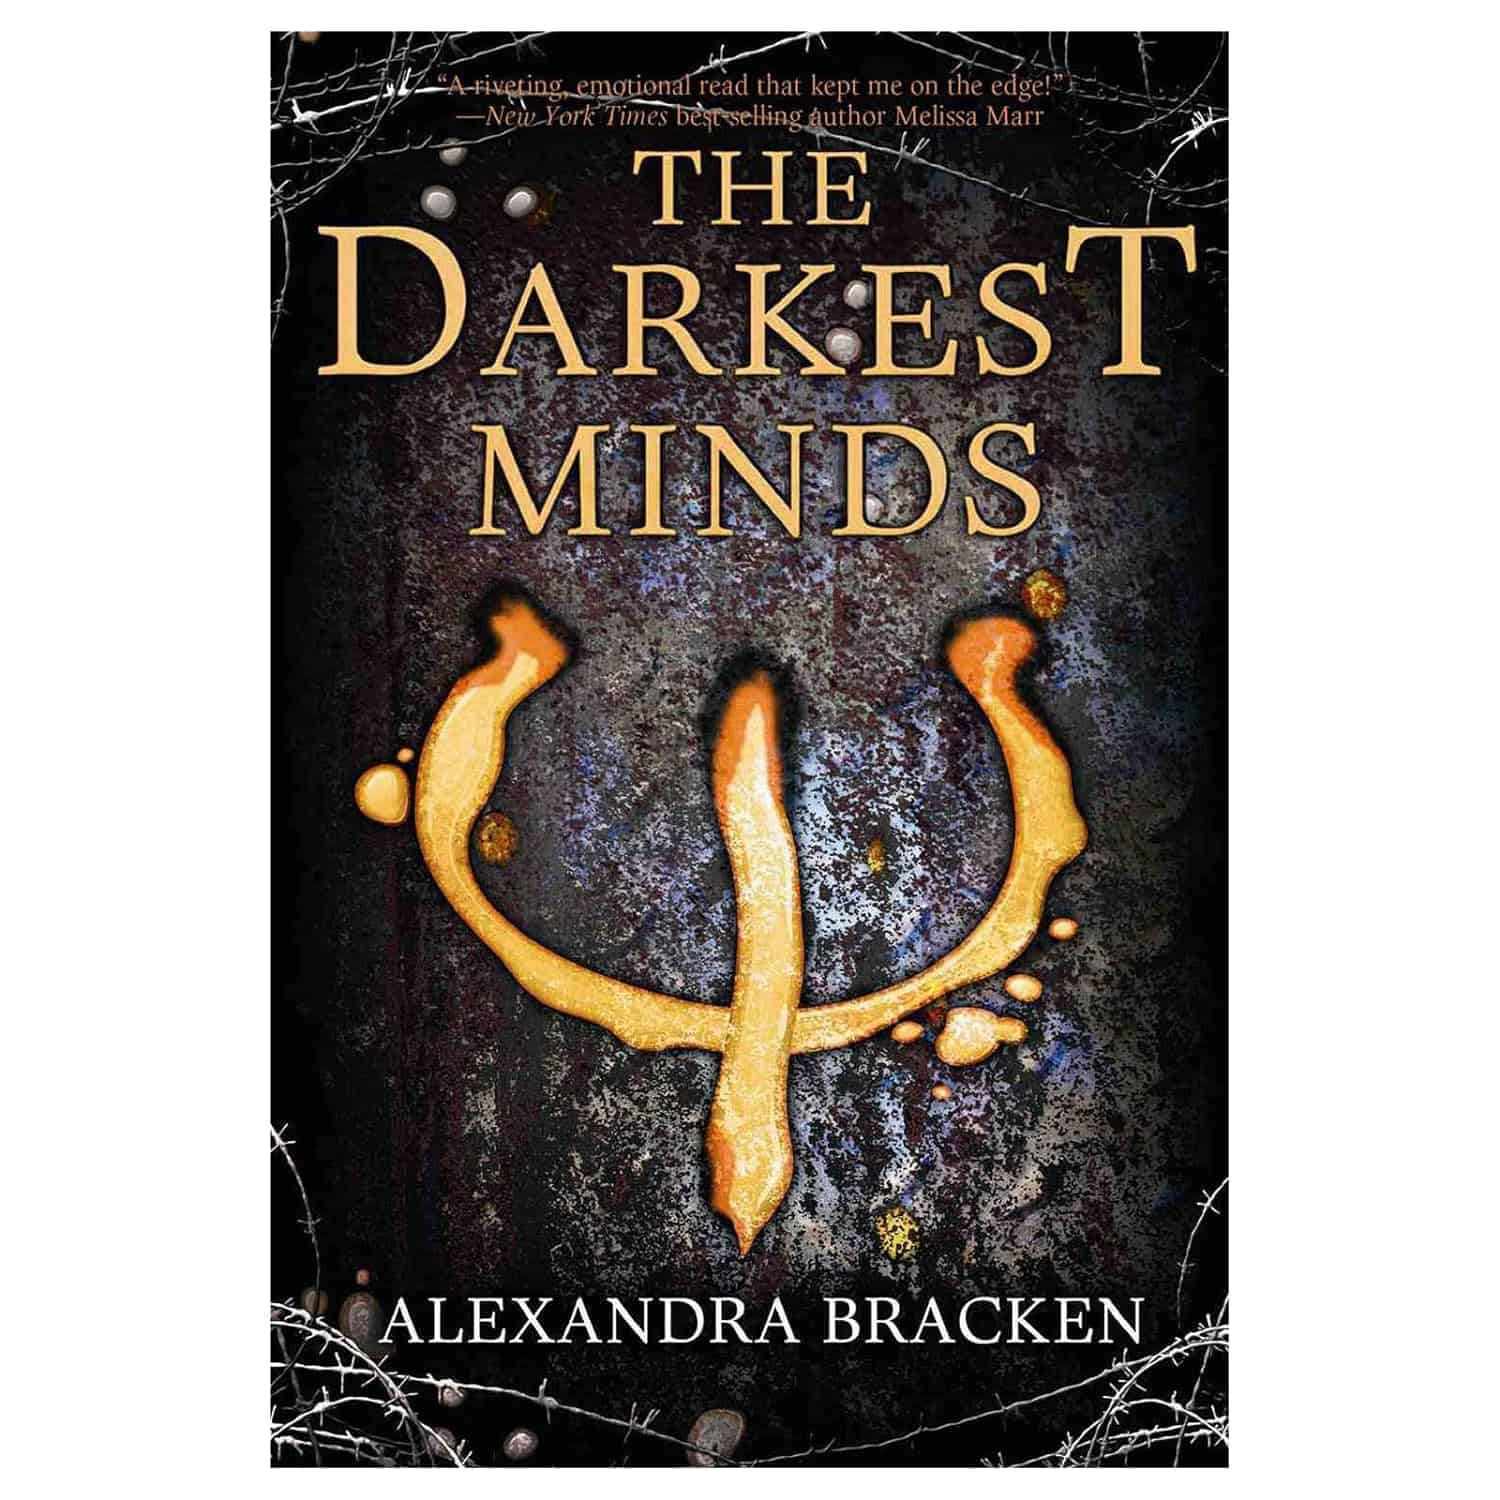 Darkest Minds by Alexandra Bracken